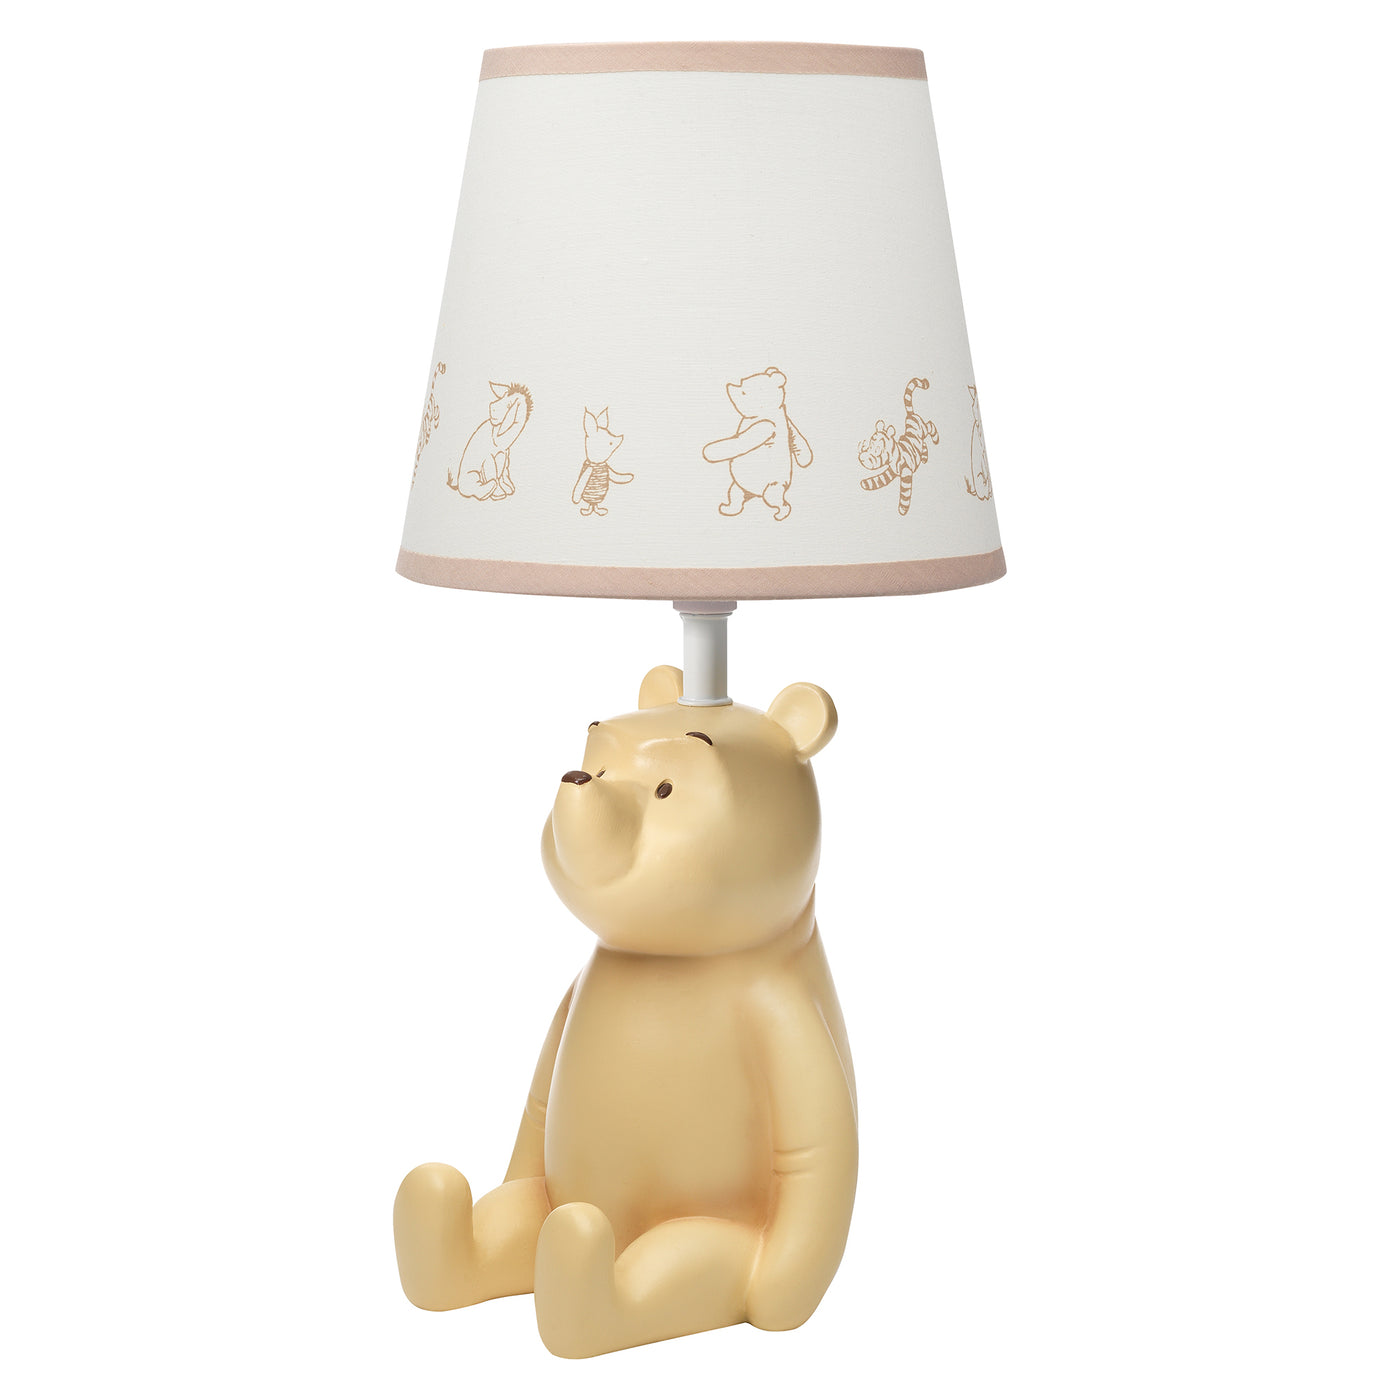 Storytime Pooh Lamp